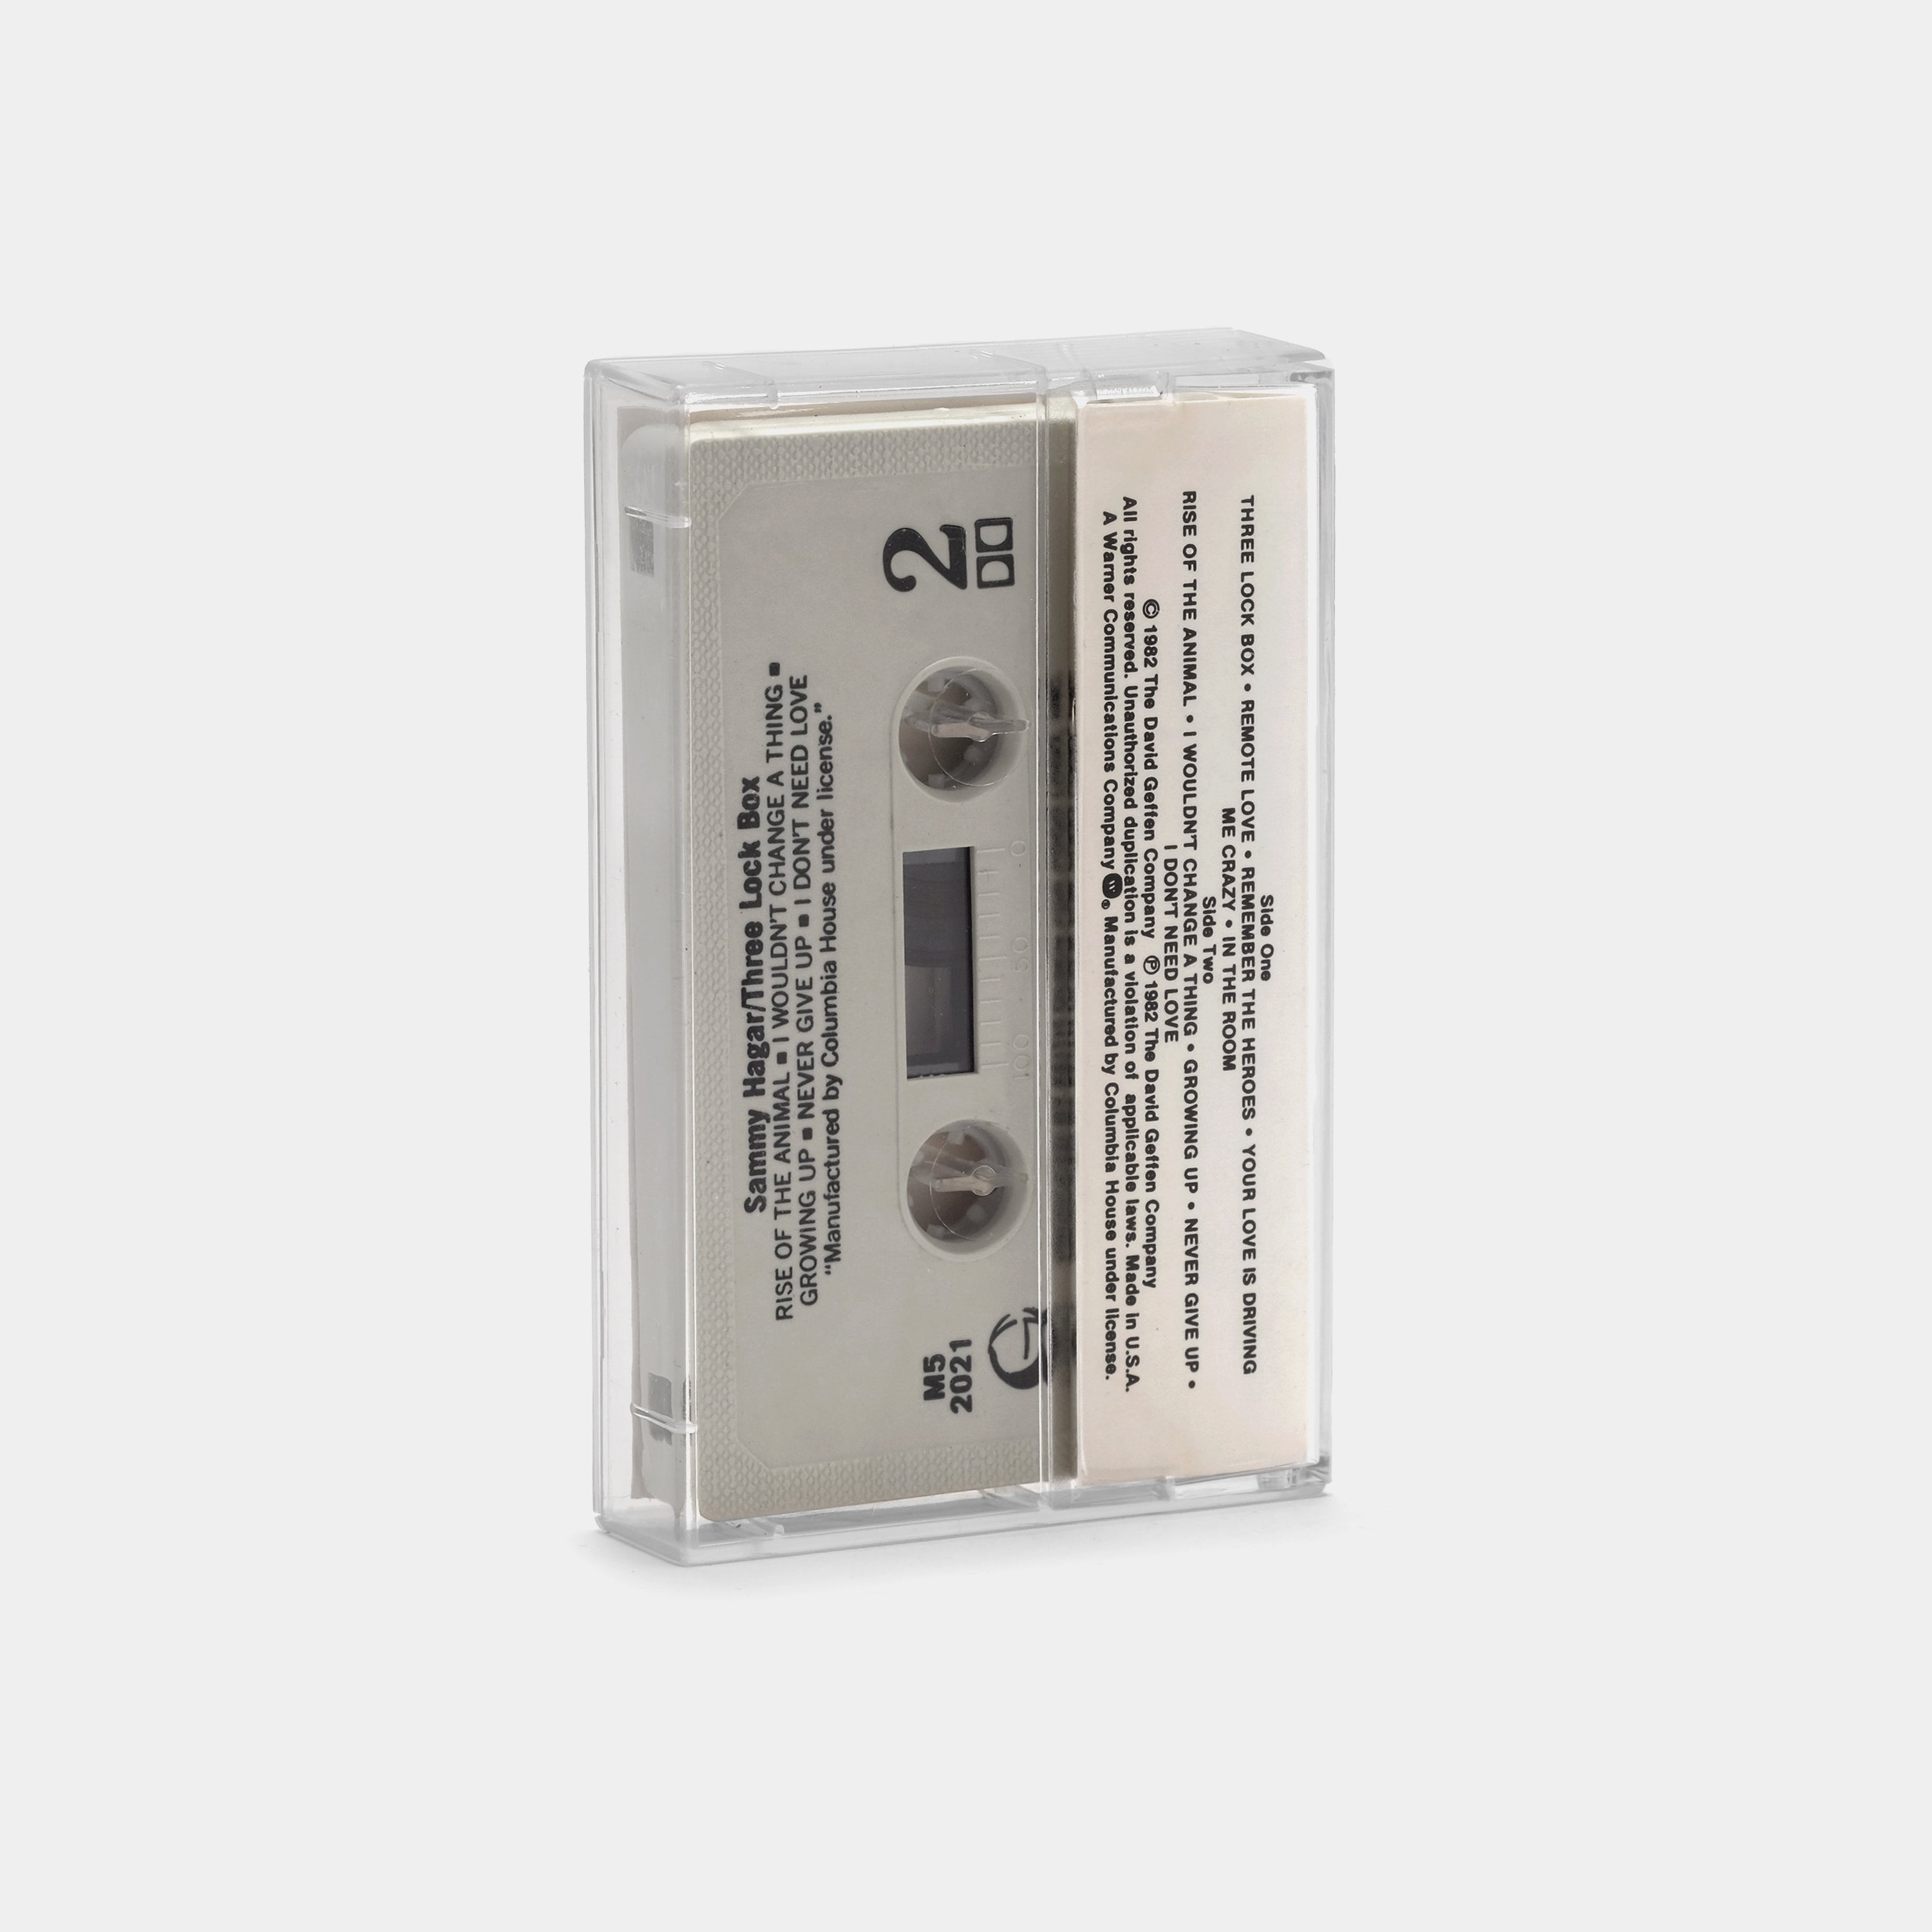 Sammy Hagar - Three Lock Box Cassette Tape